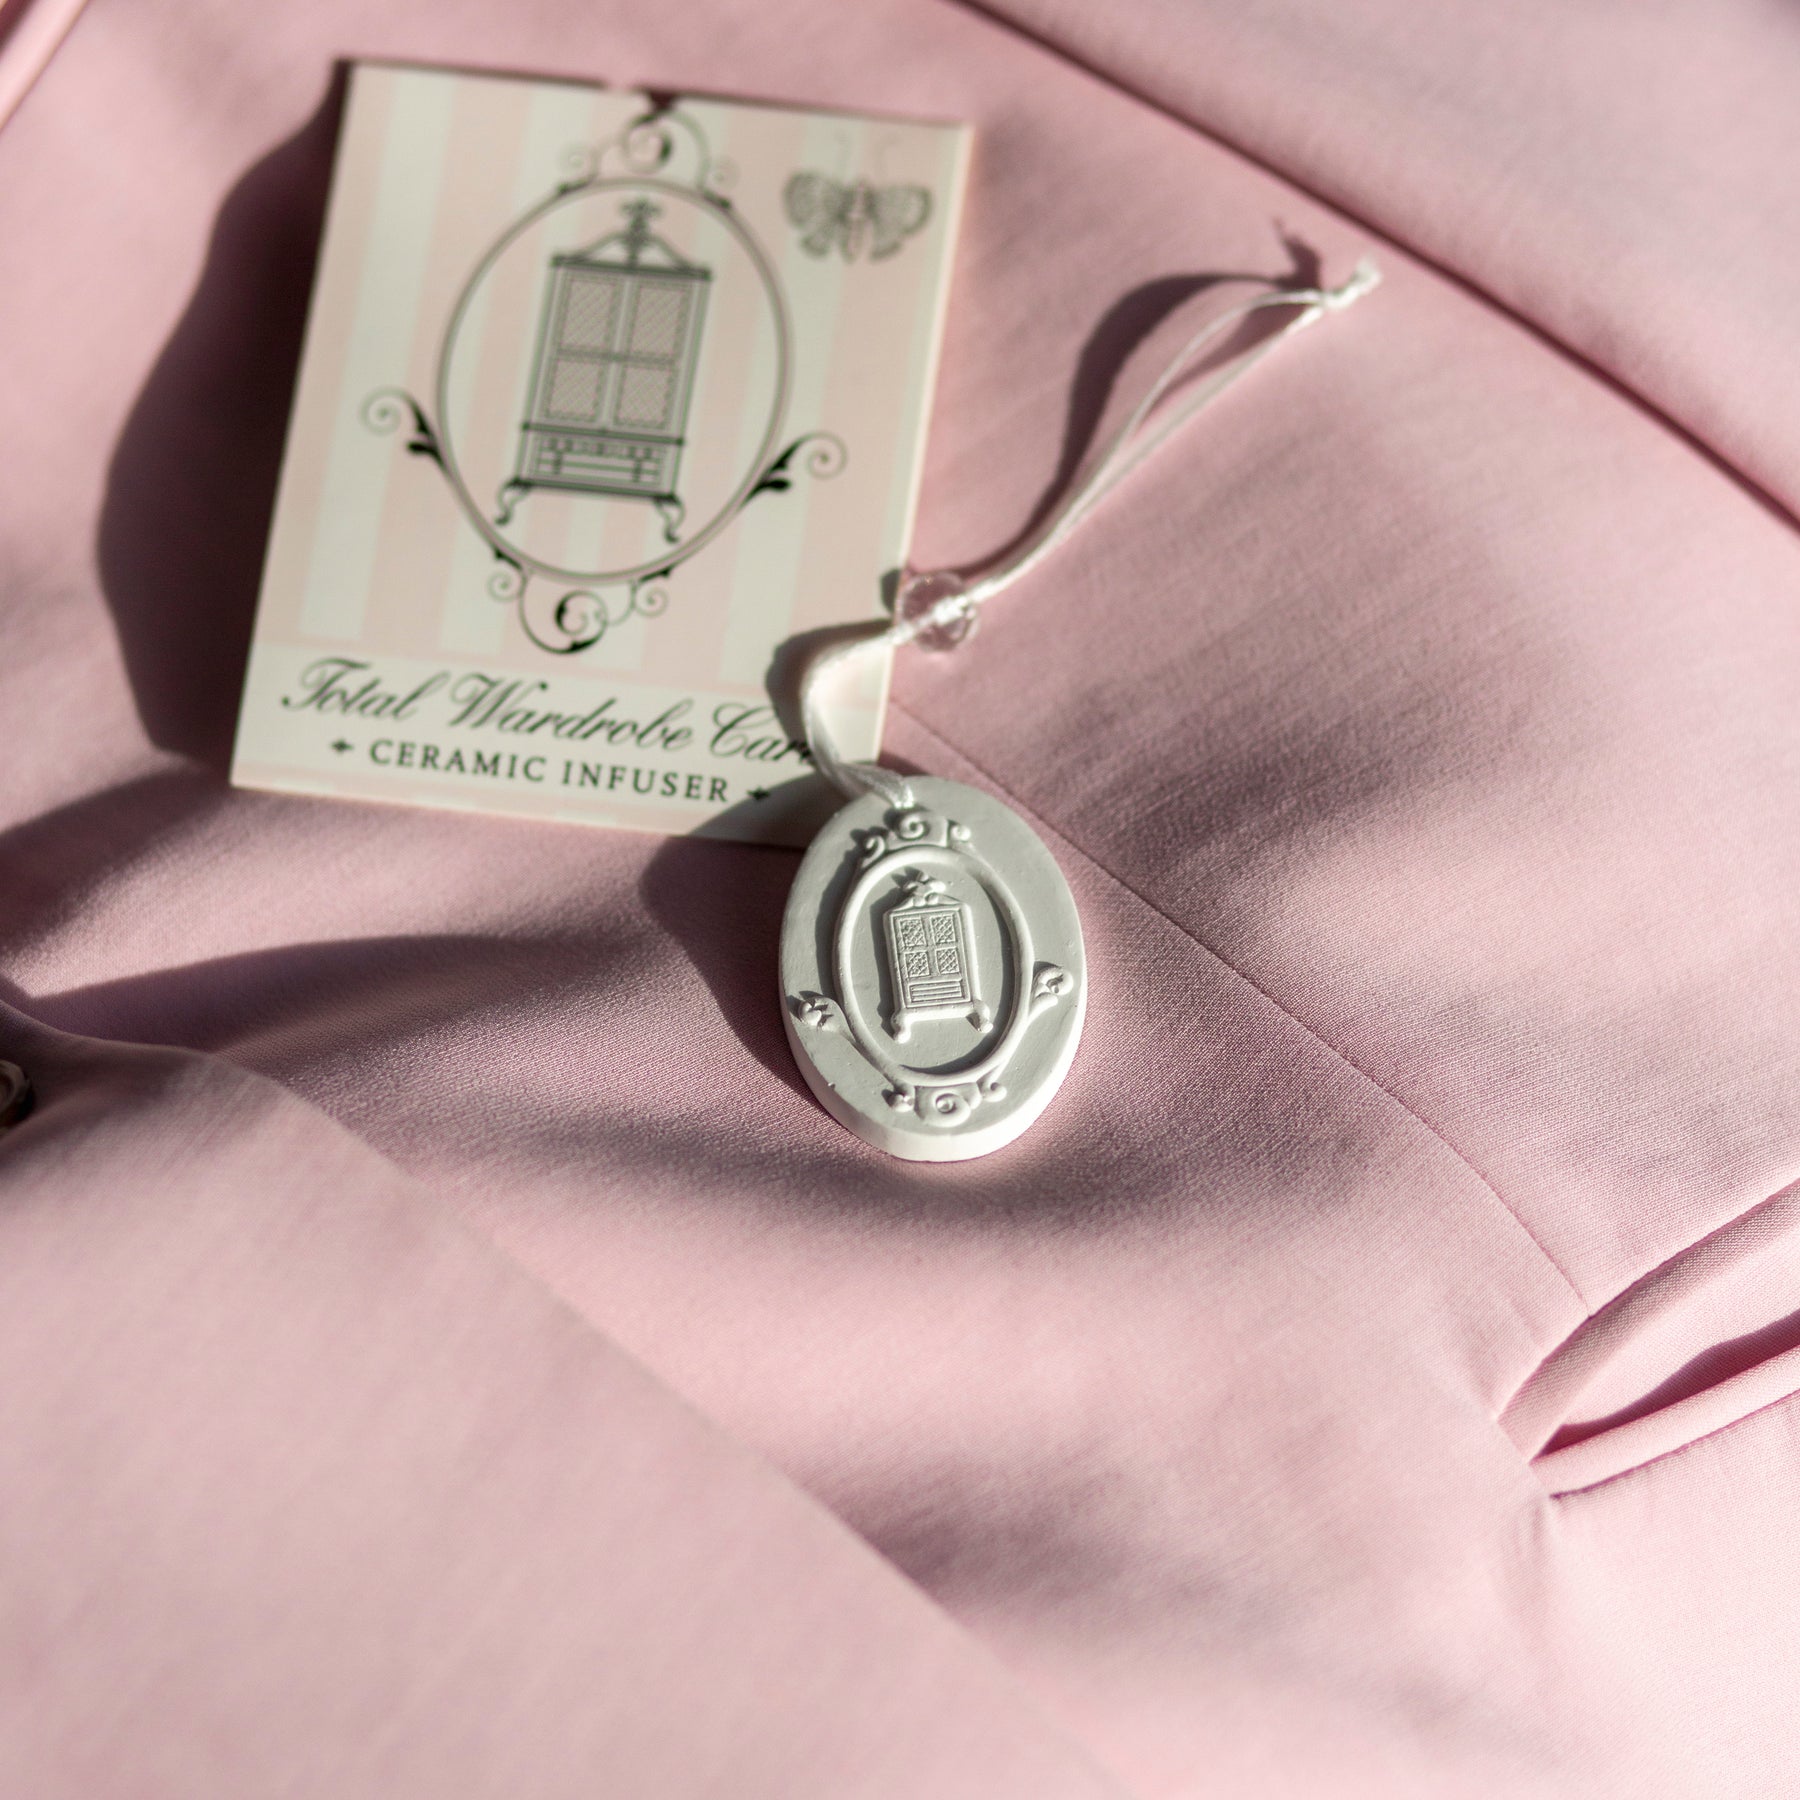 White ceramic hanger on top of pink blazer beside packaging